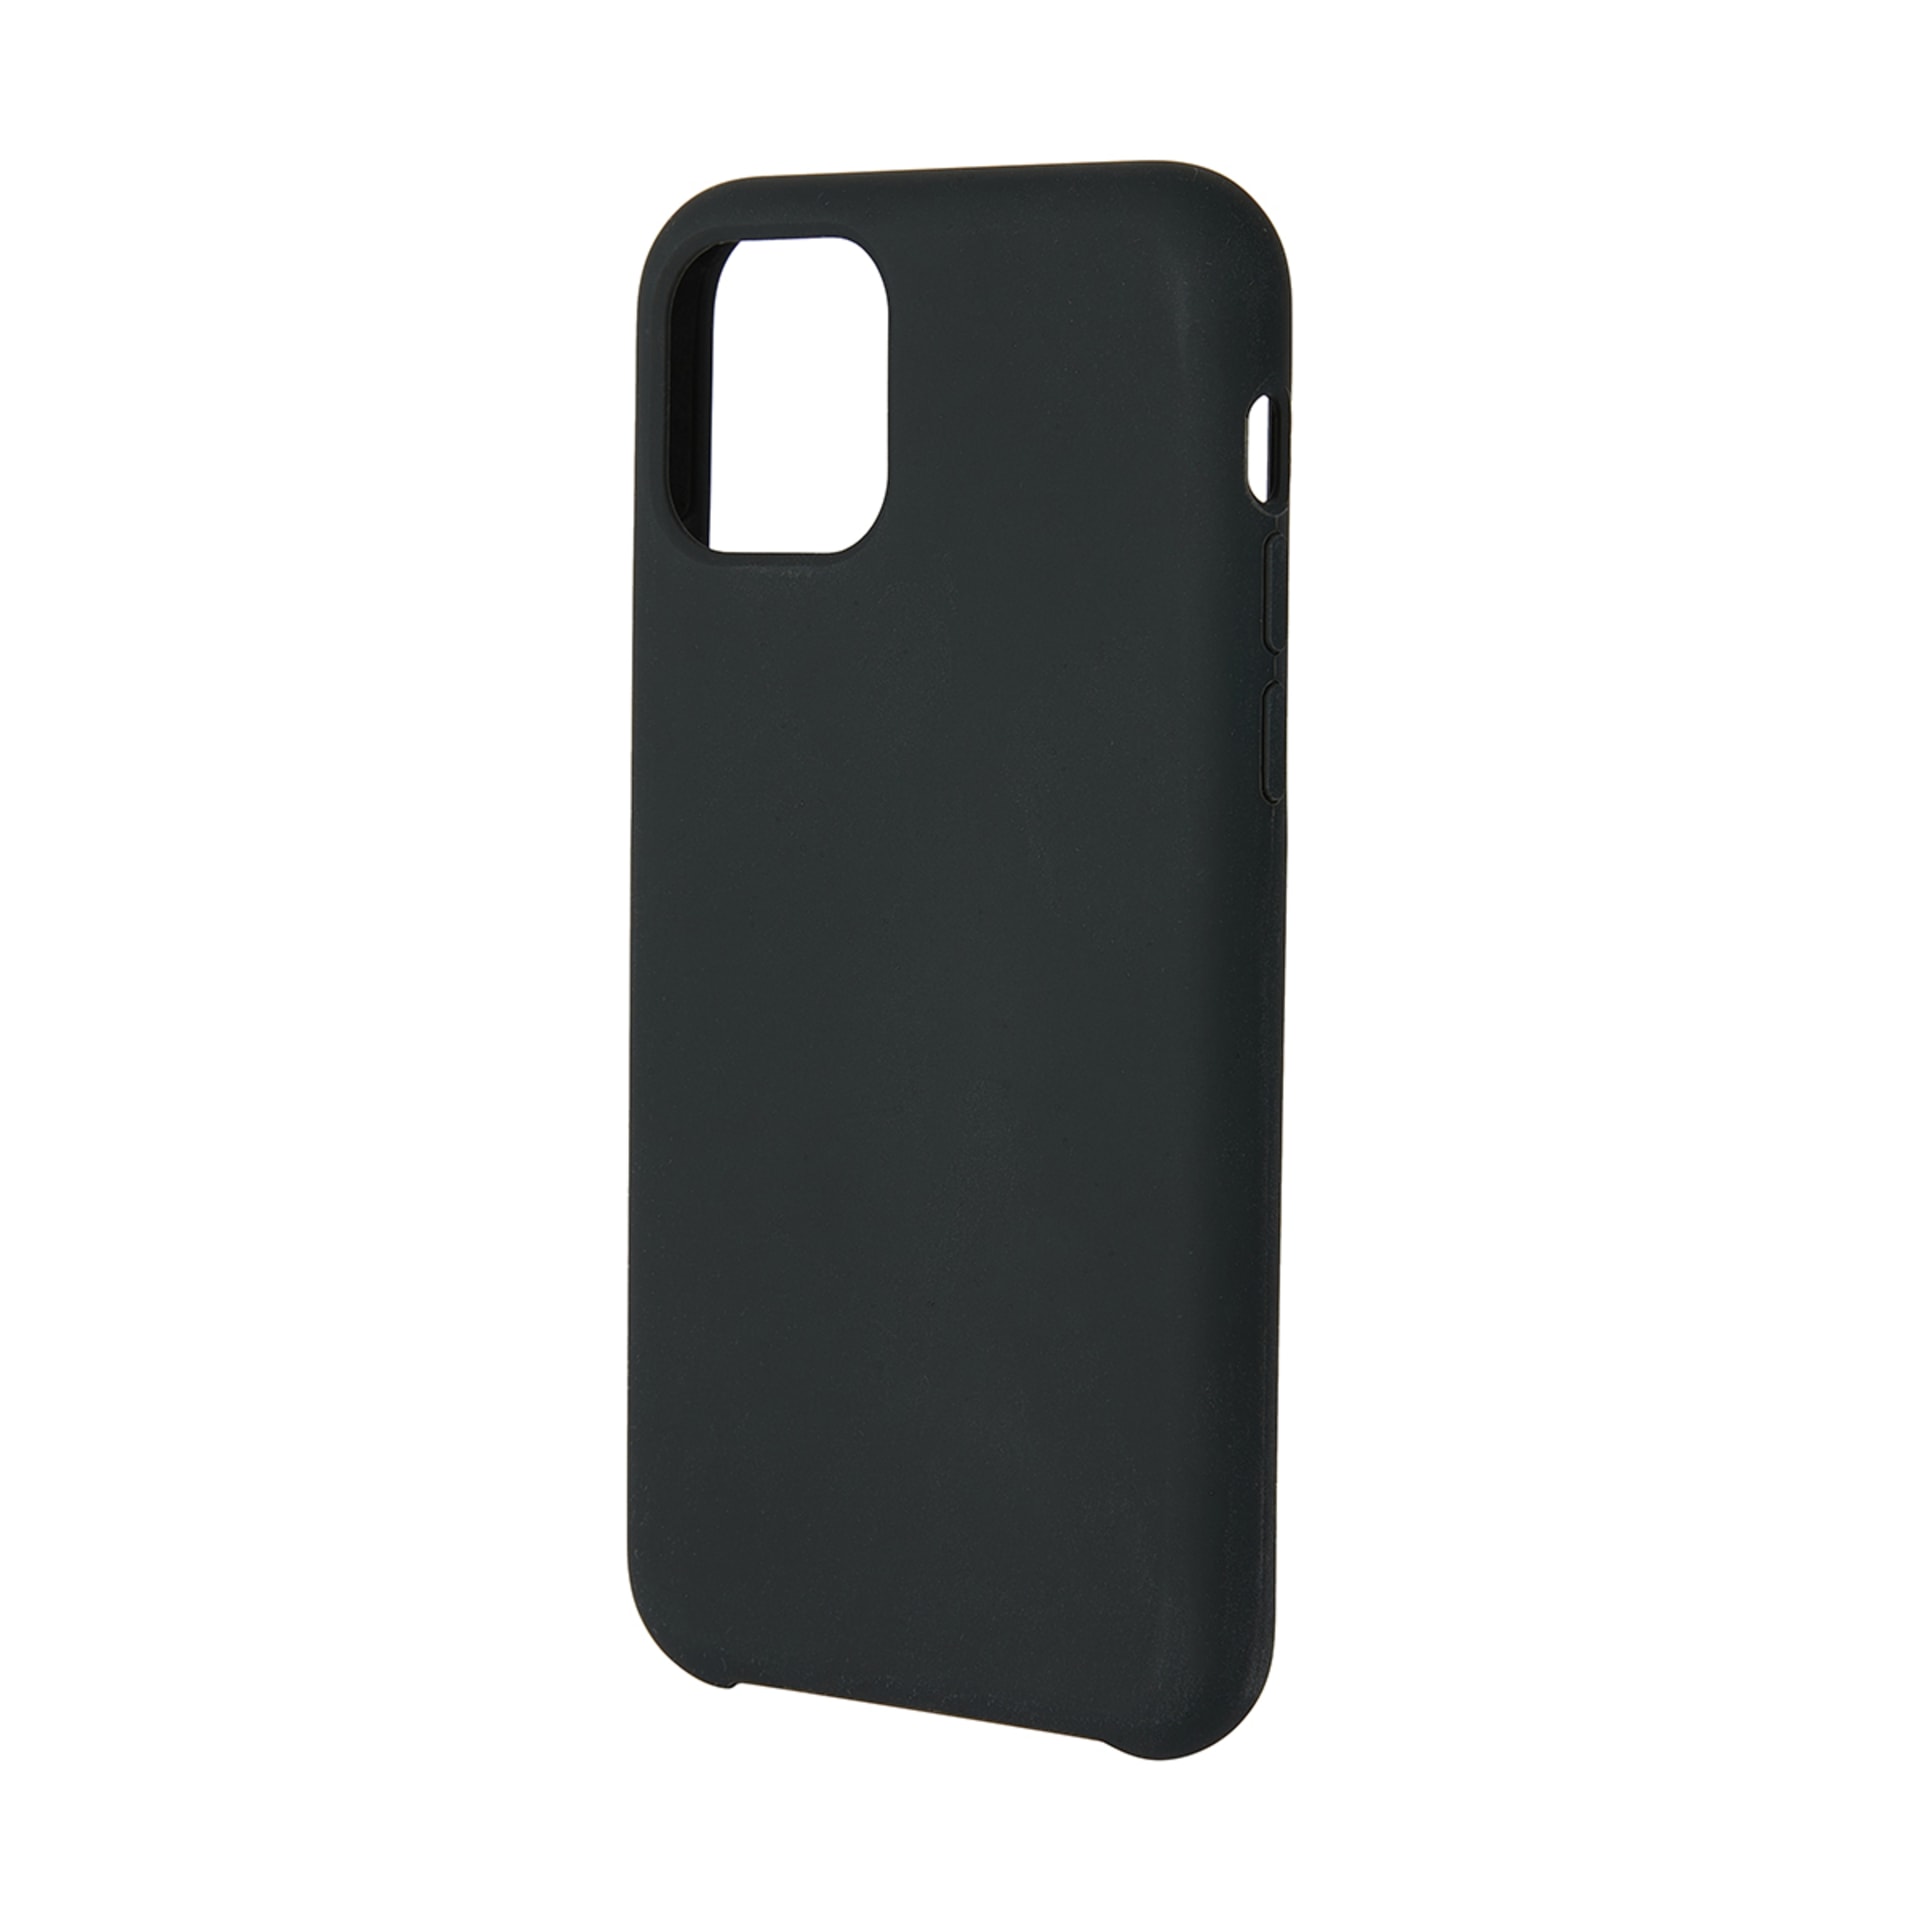 iPhone 11 Pro Silicone Case - Black - Kmart NZ